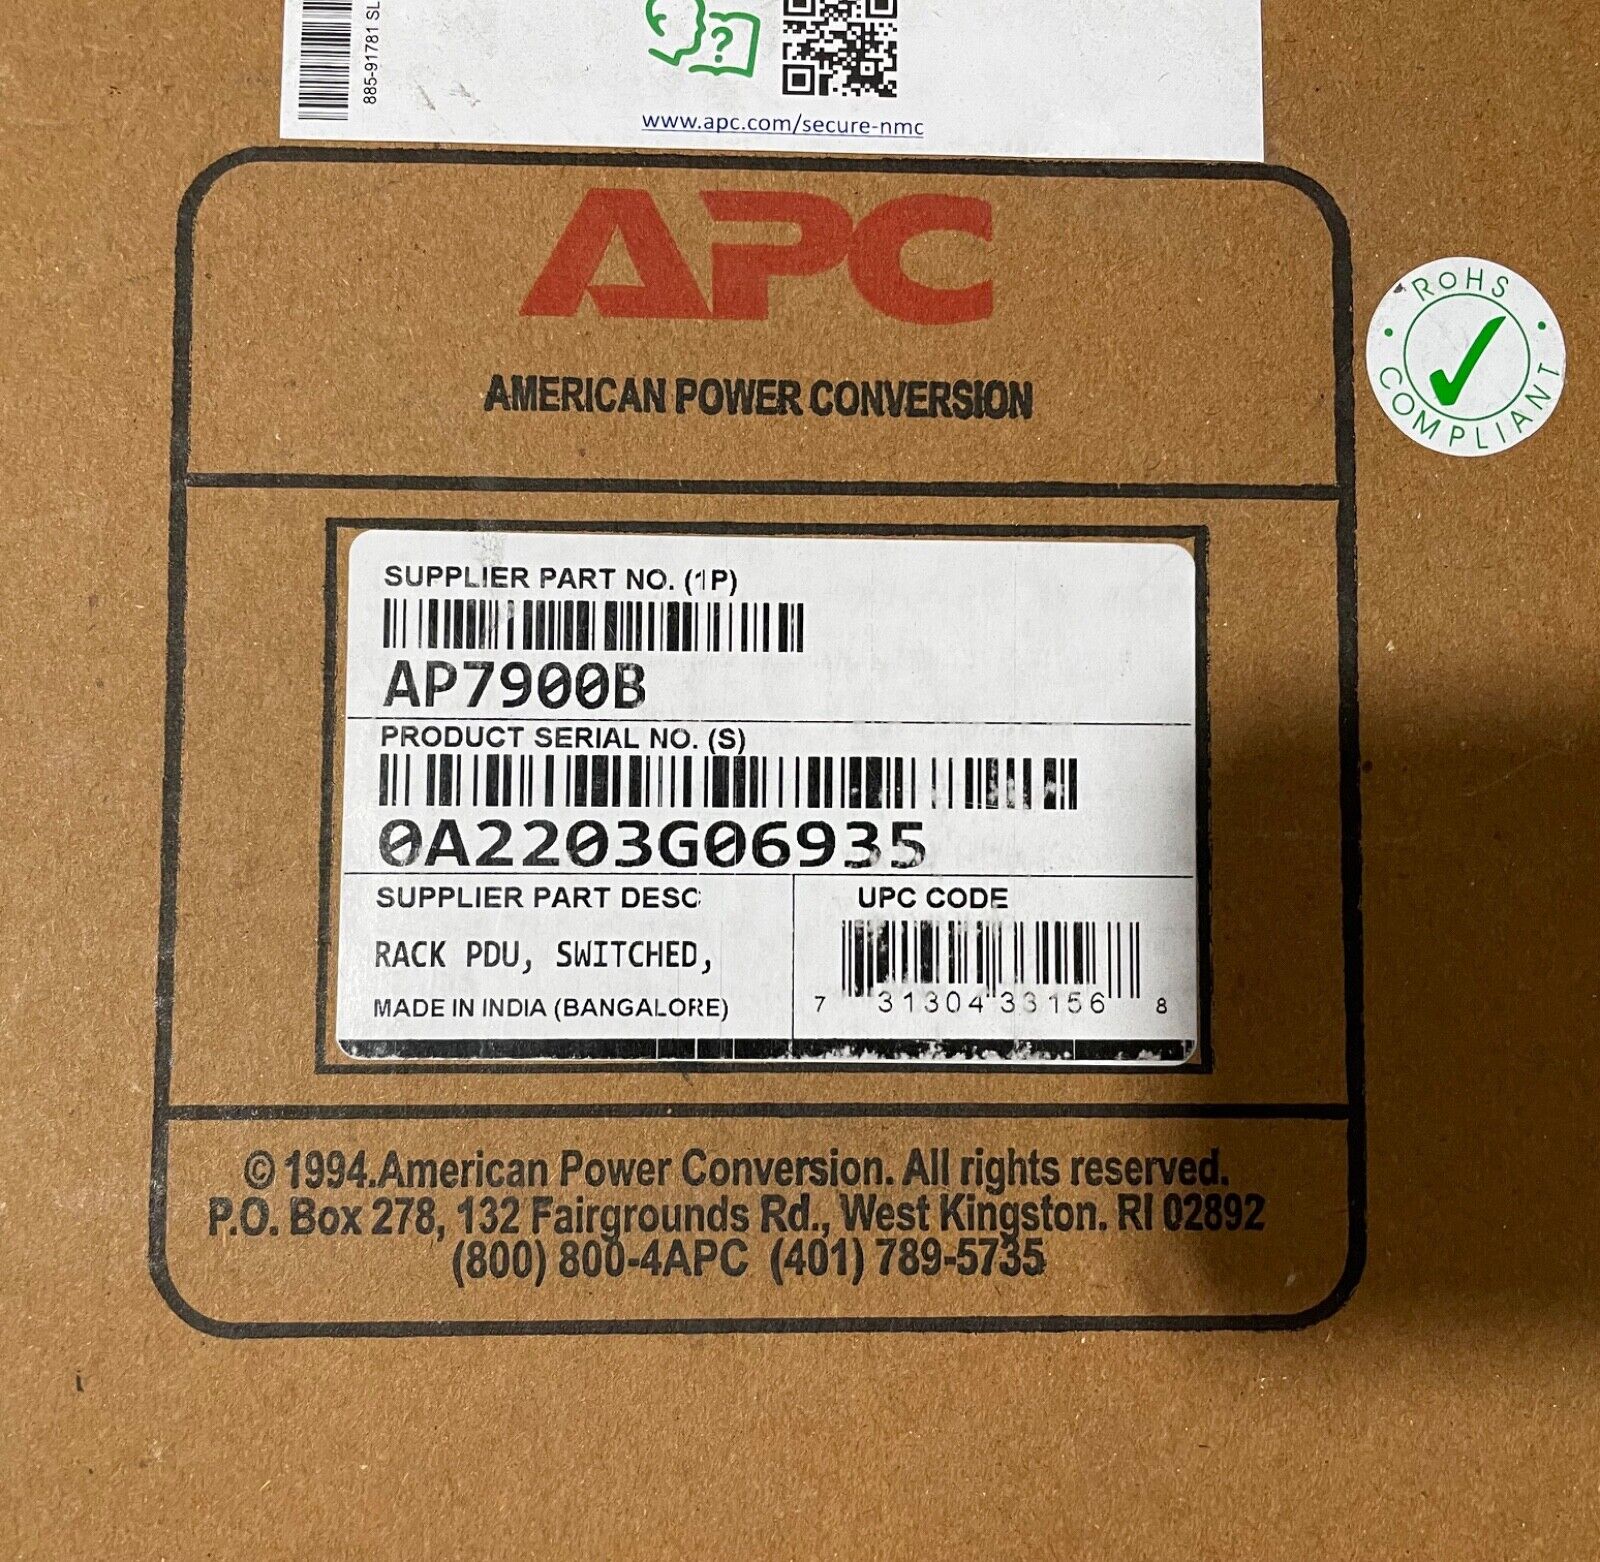 NEW SEALED APC AP7900B Switched Rack PDU